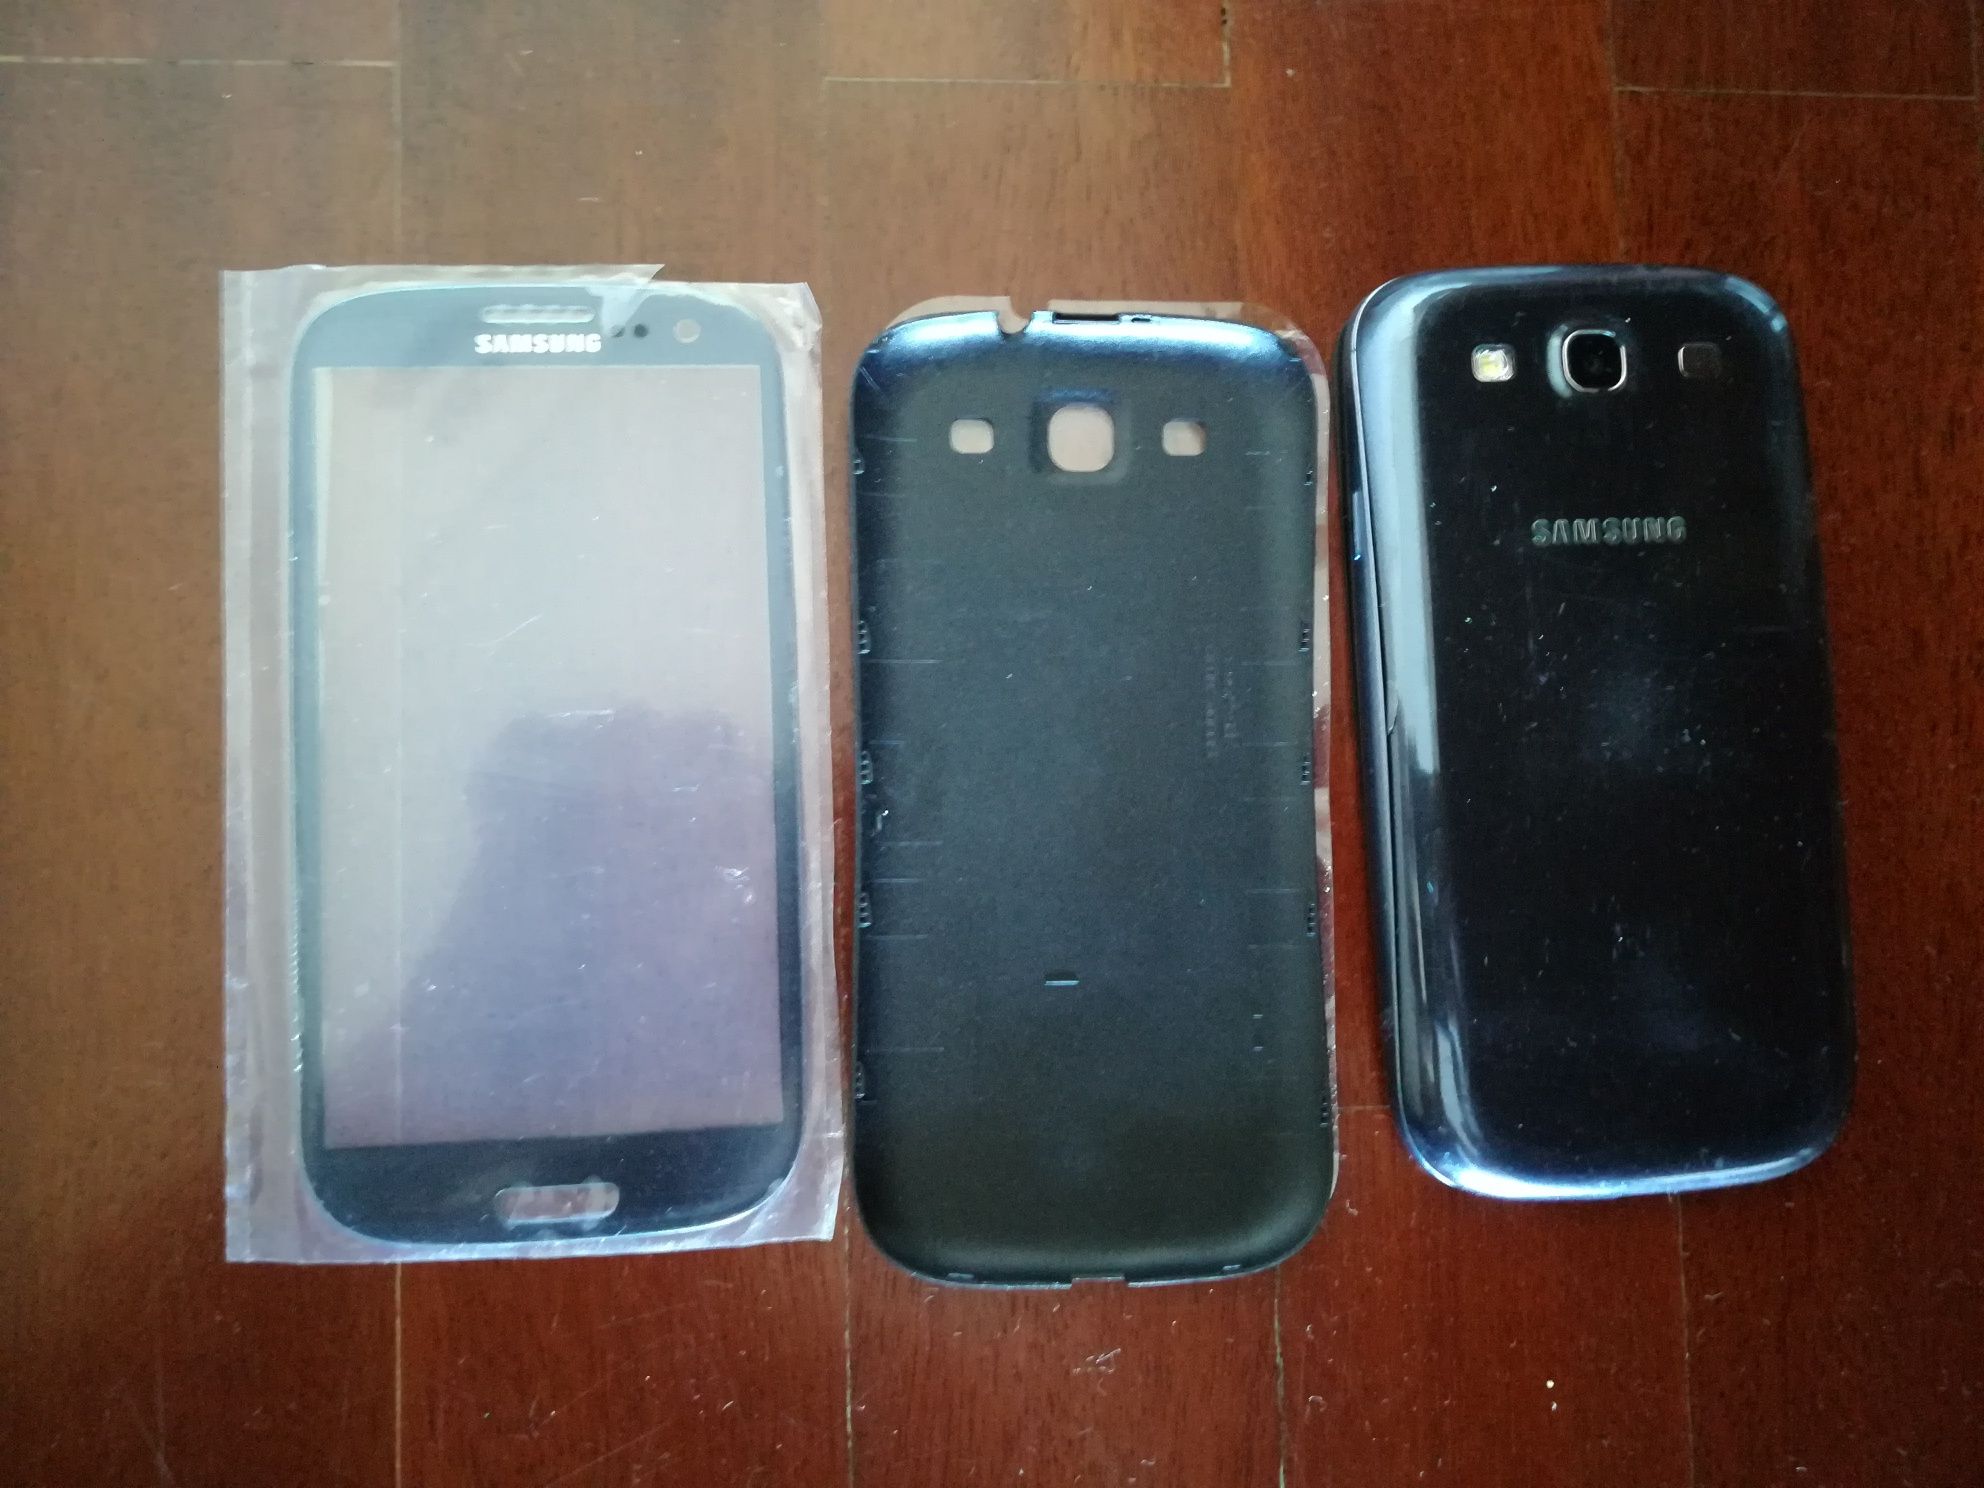 Telemóvel Samsung III peças